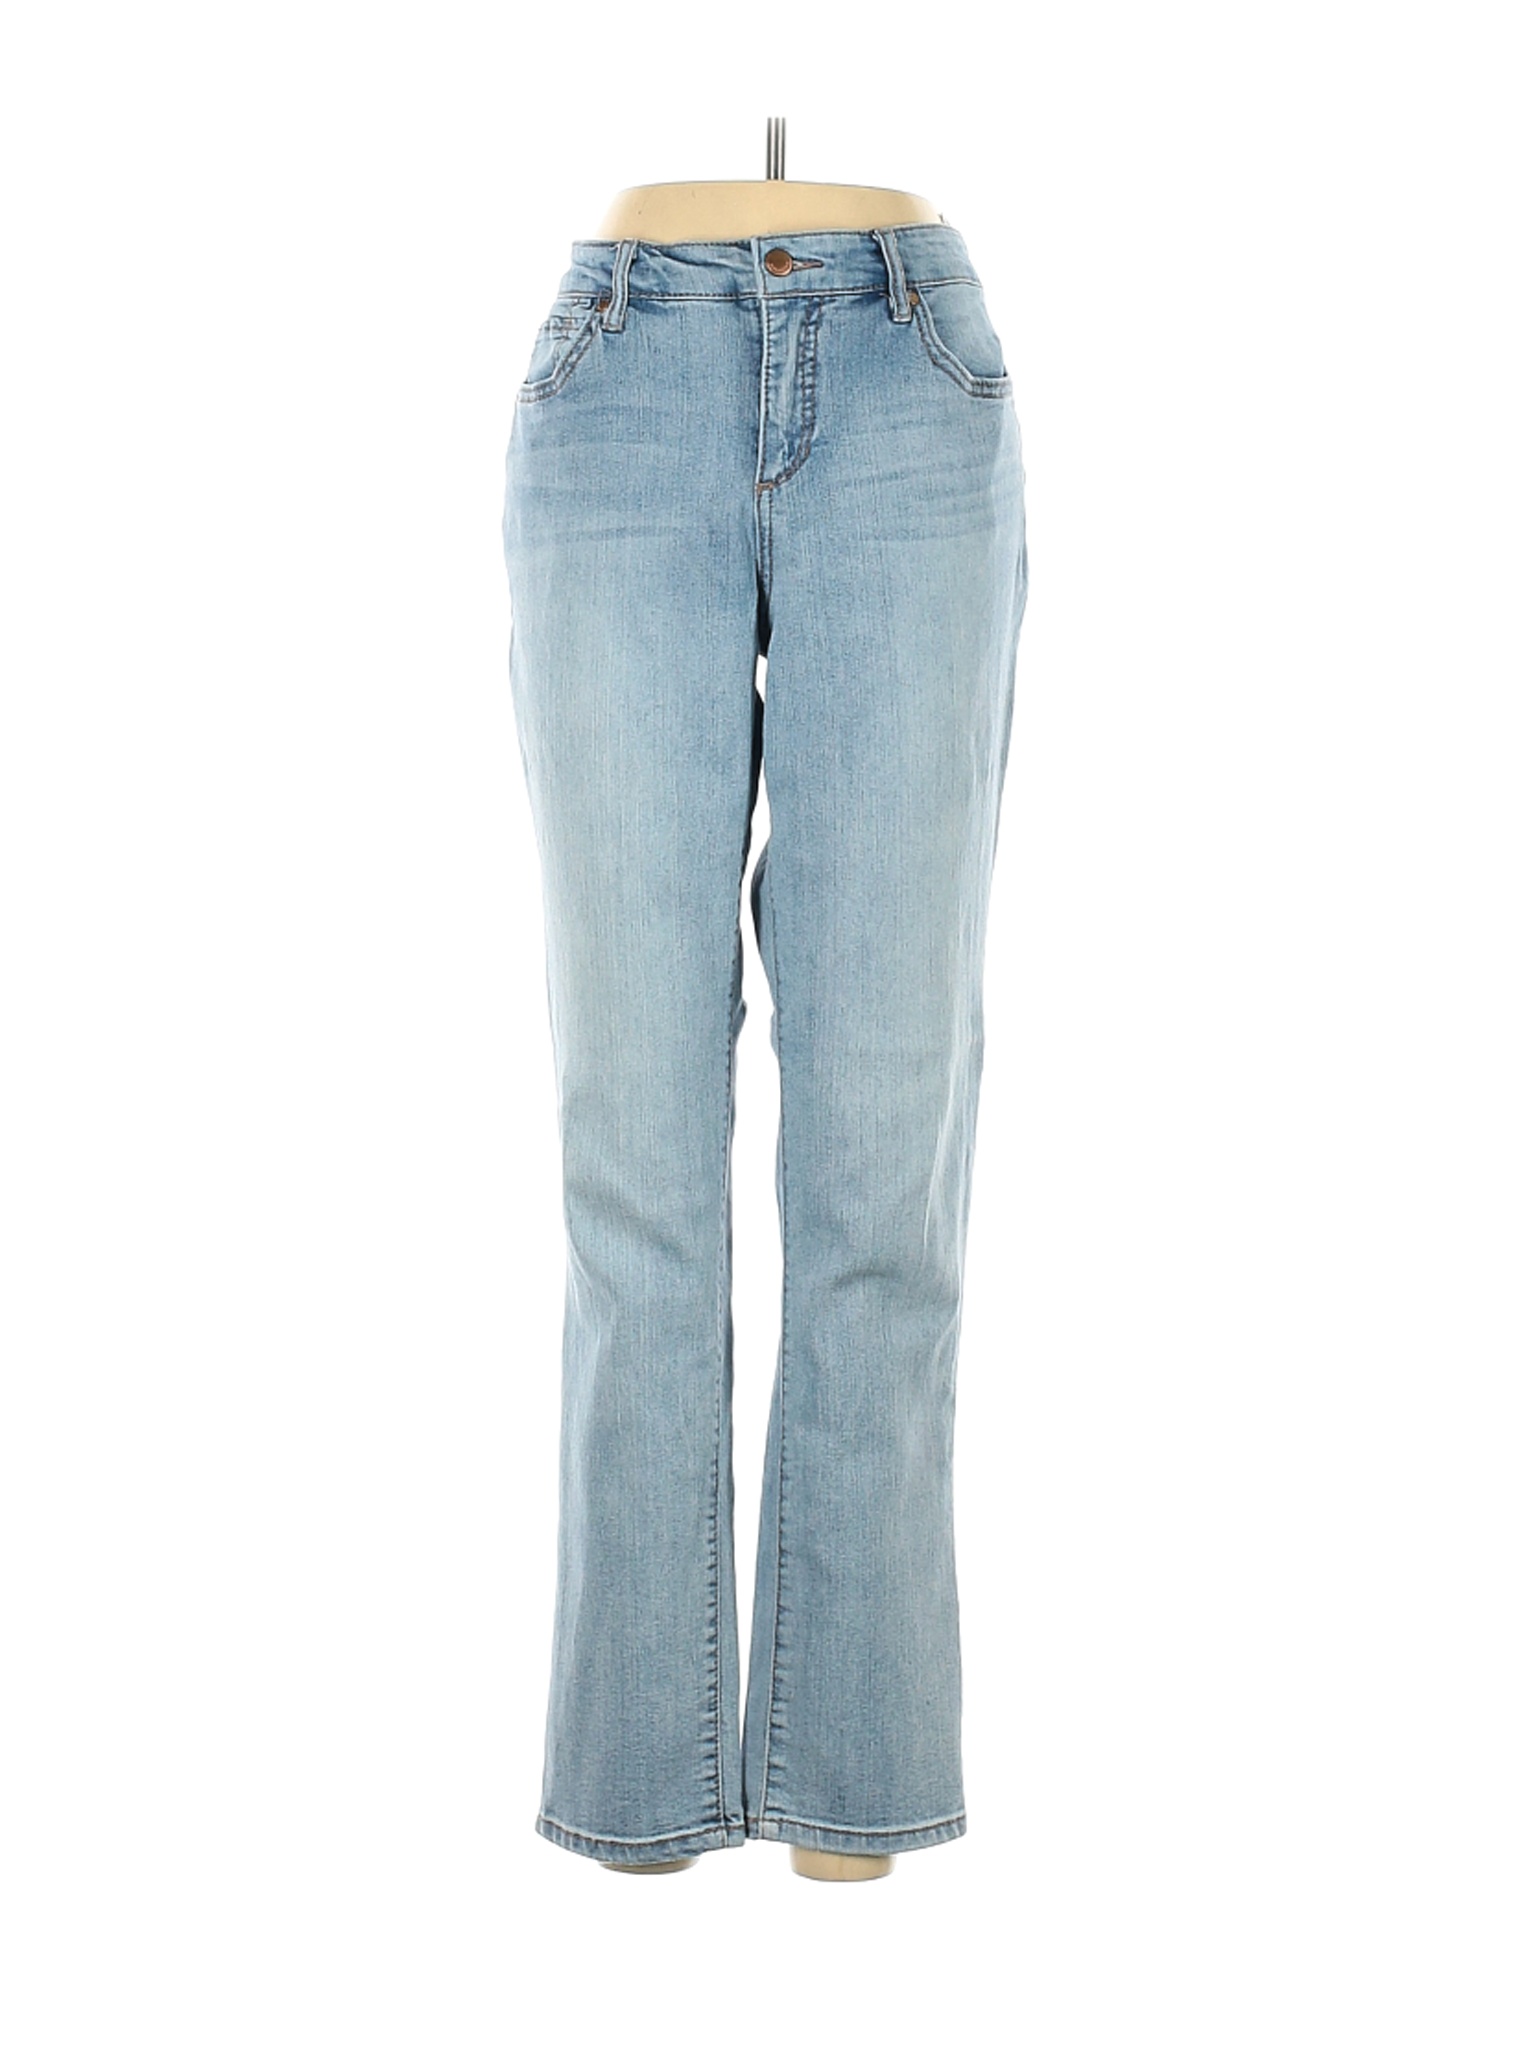 Bandolino Women Blue Jeans 8 | eBay